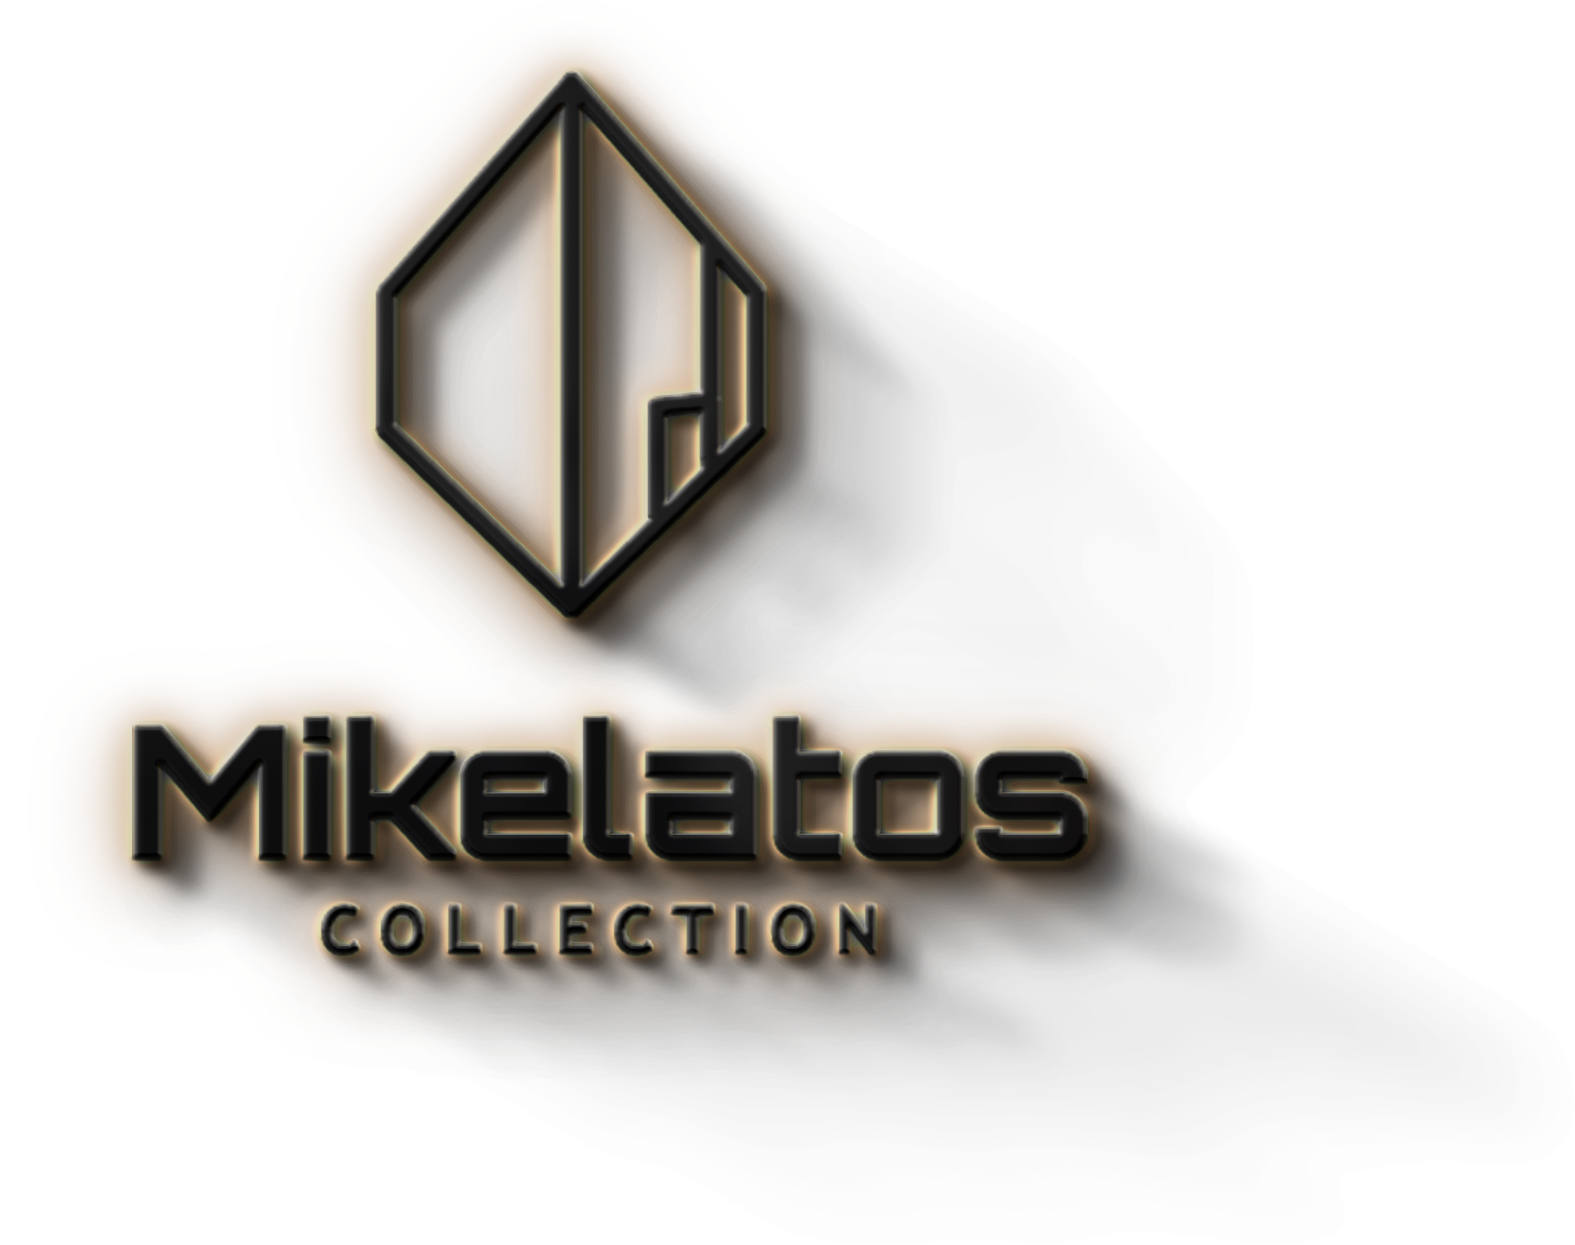 Mikelatos Collection | Vacation Rentals in Skala Kefalonia | Kefalonia Villas, Apartments, Studios & Holiday Homes